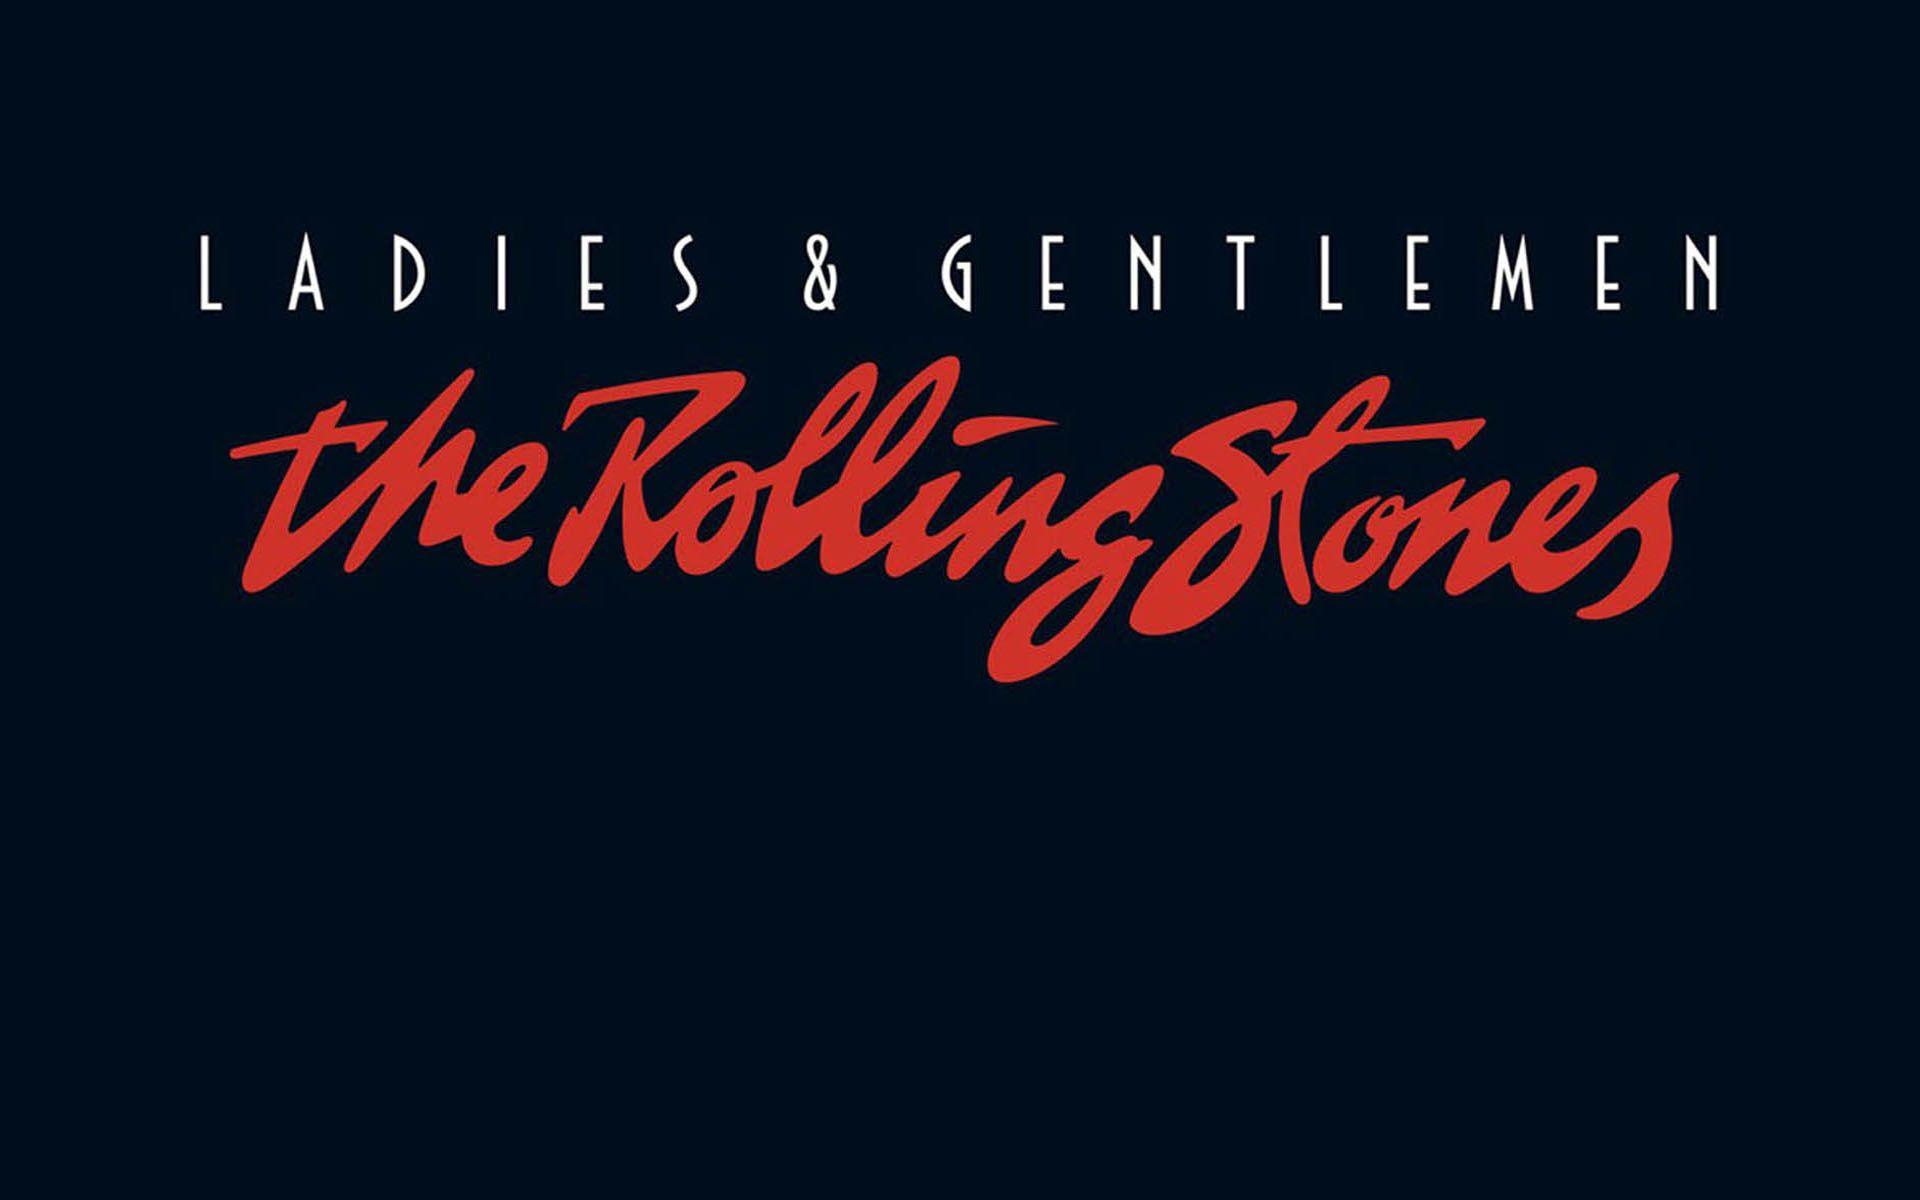 The Rolling Stones HD Wallpaper for desktop download